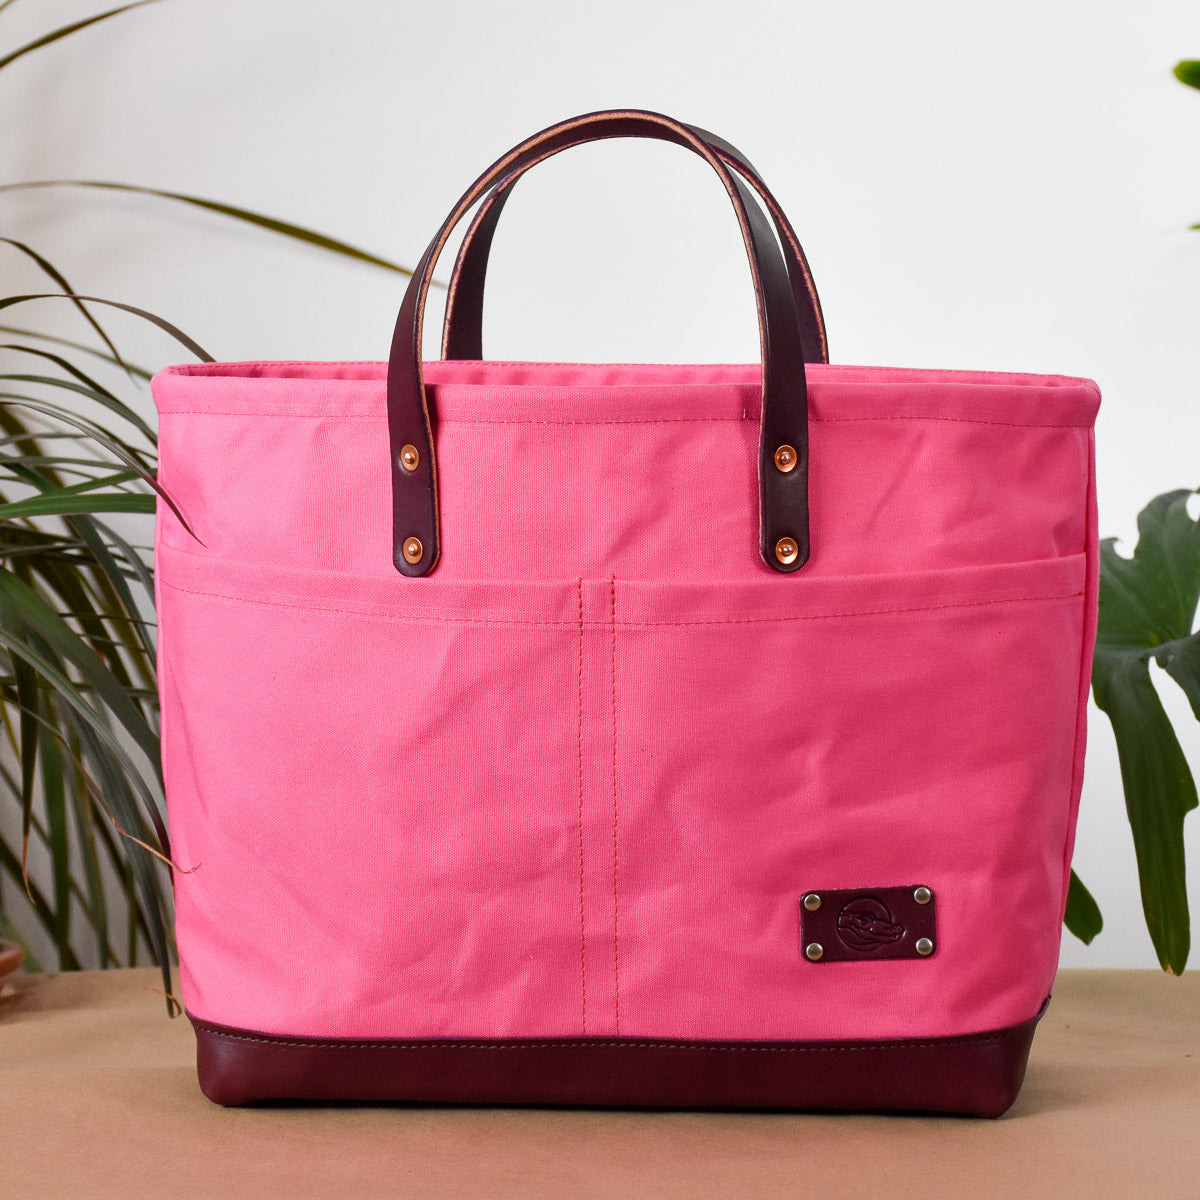 Bright Pink Bag No. 4 - The Market Bag